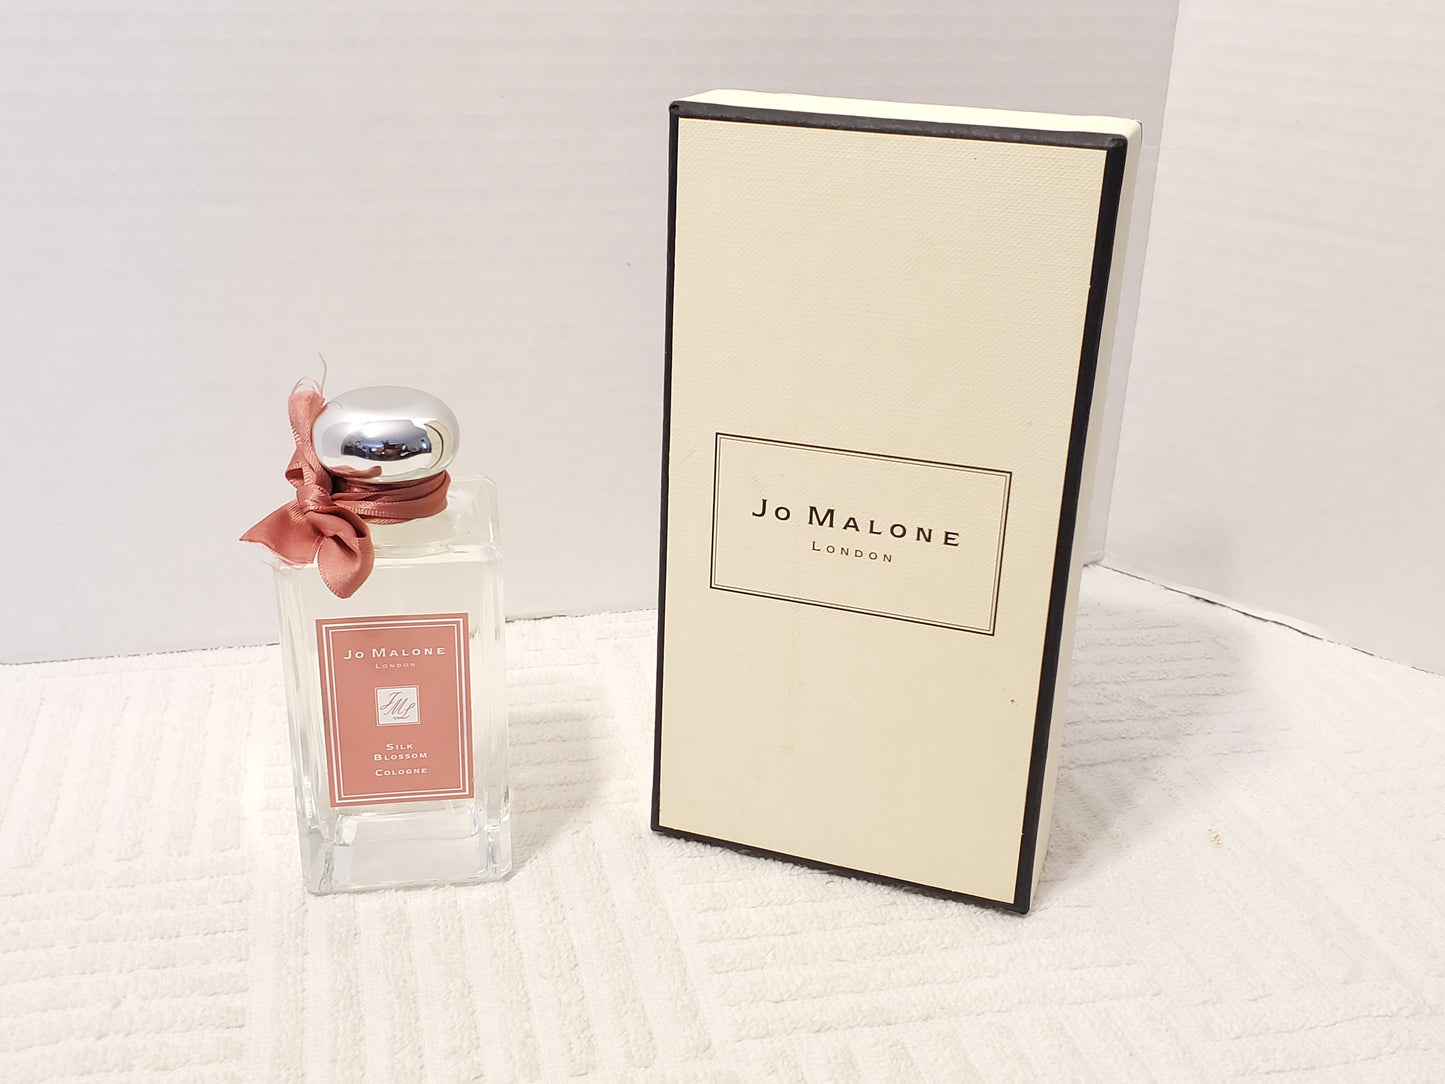 Jo Malone London Silk Blossom Cologne Women's Perfume Spray 3.4 oz Bottle